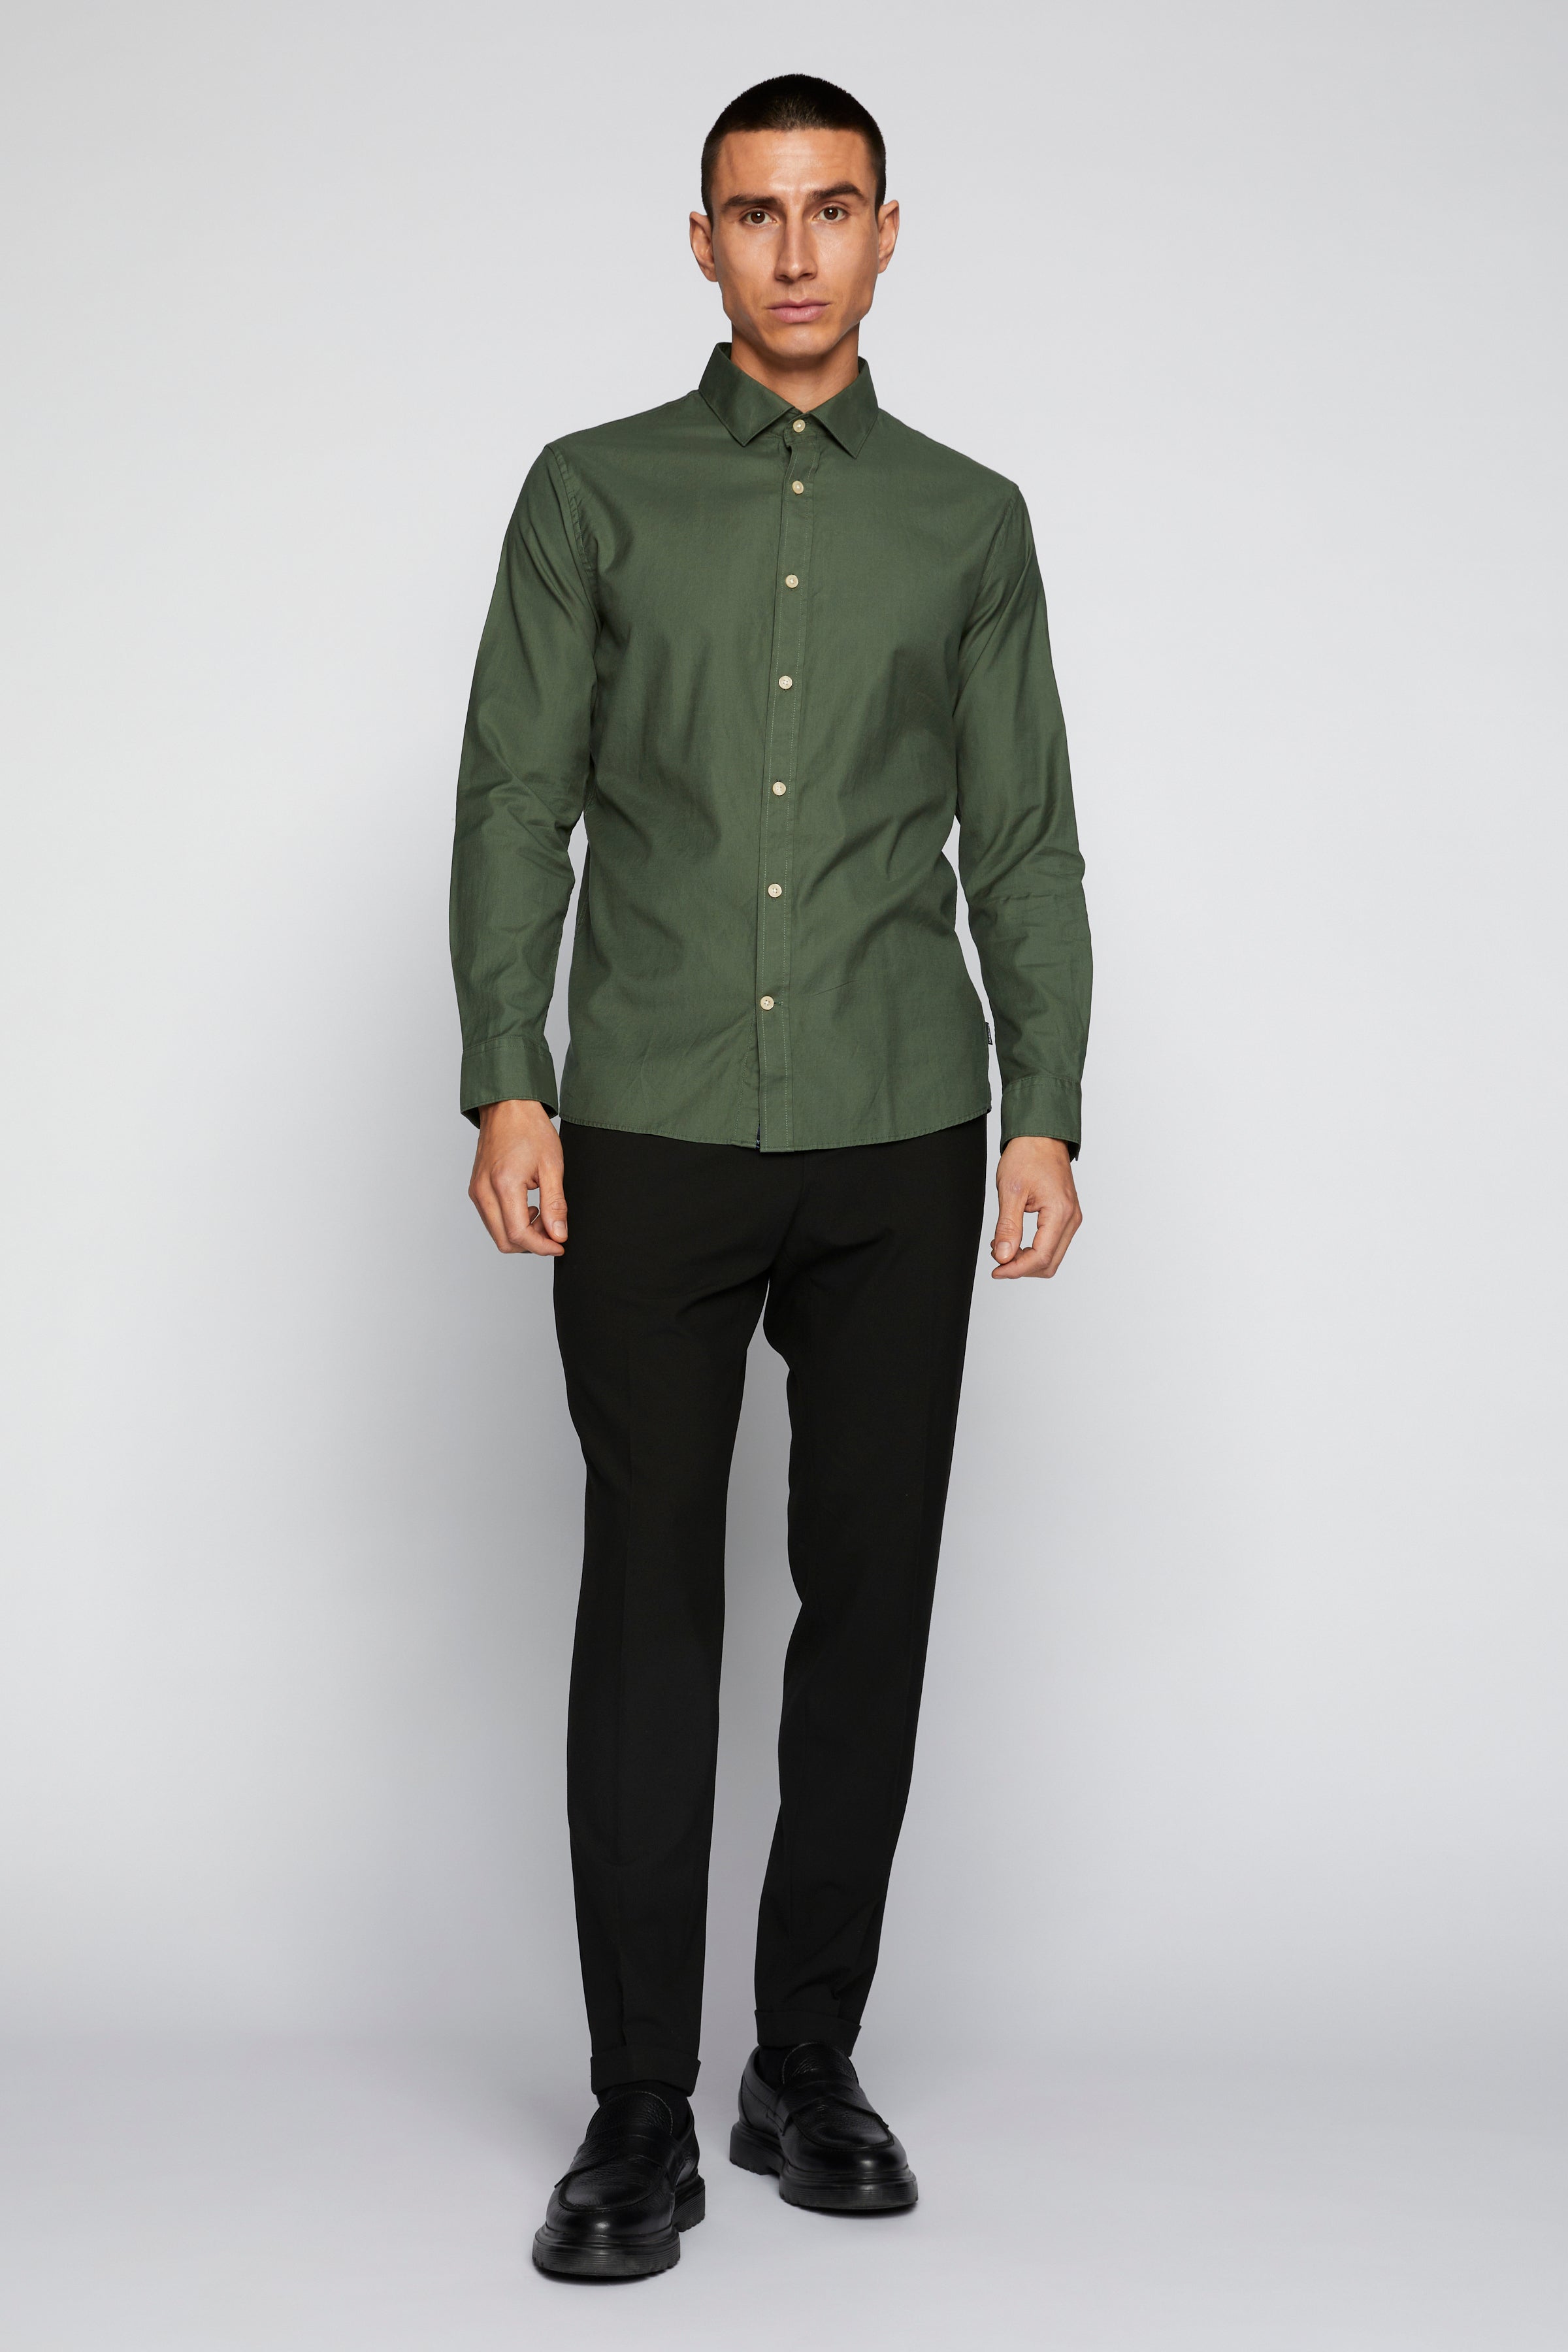 Men's shirts – Lark & Finch Clothing Ltd.